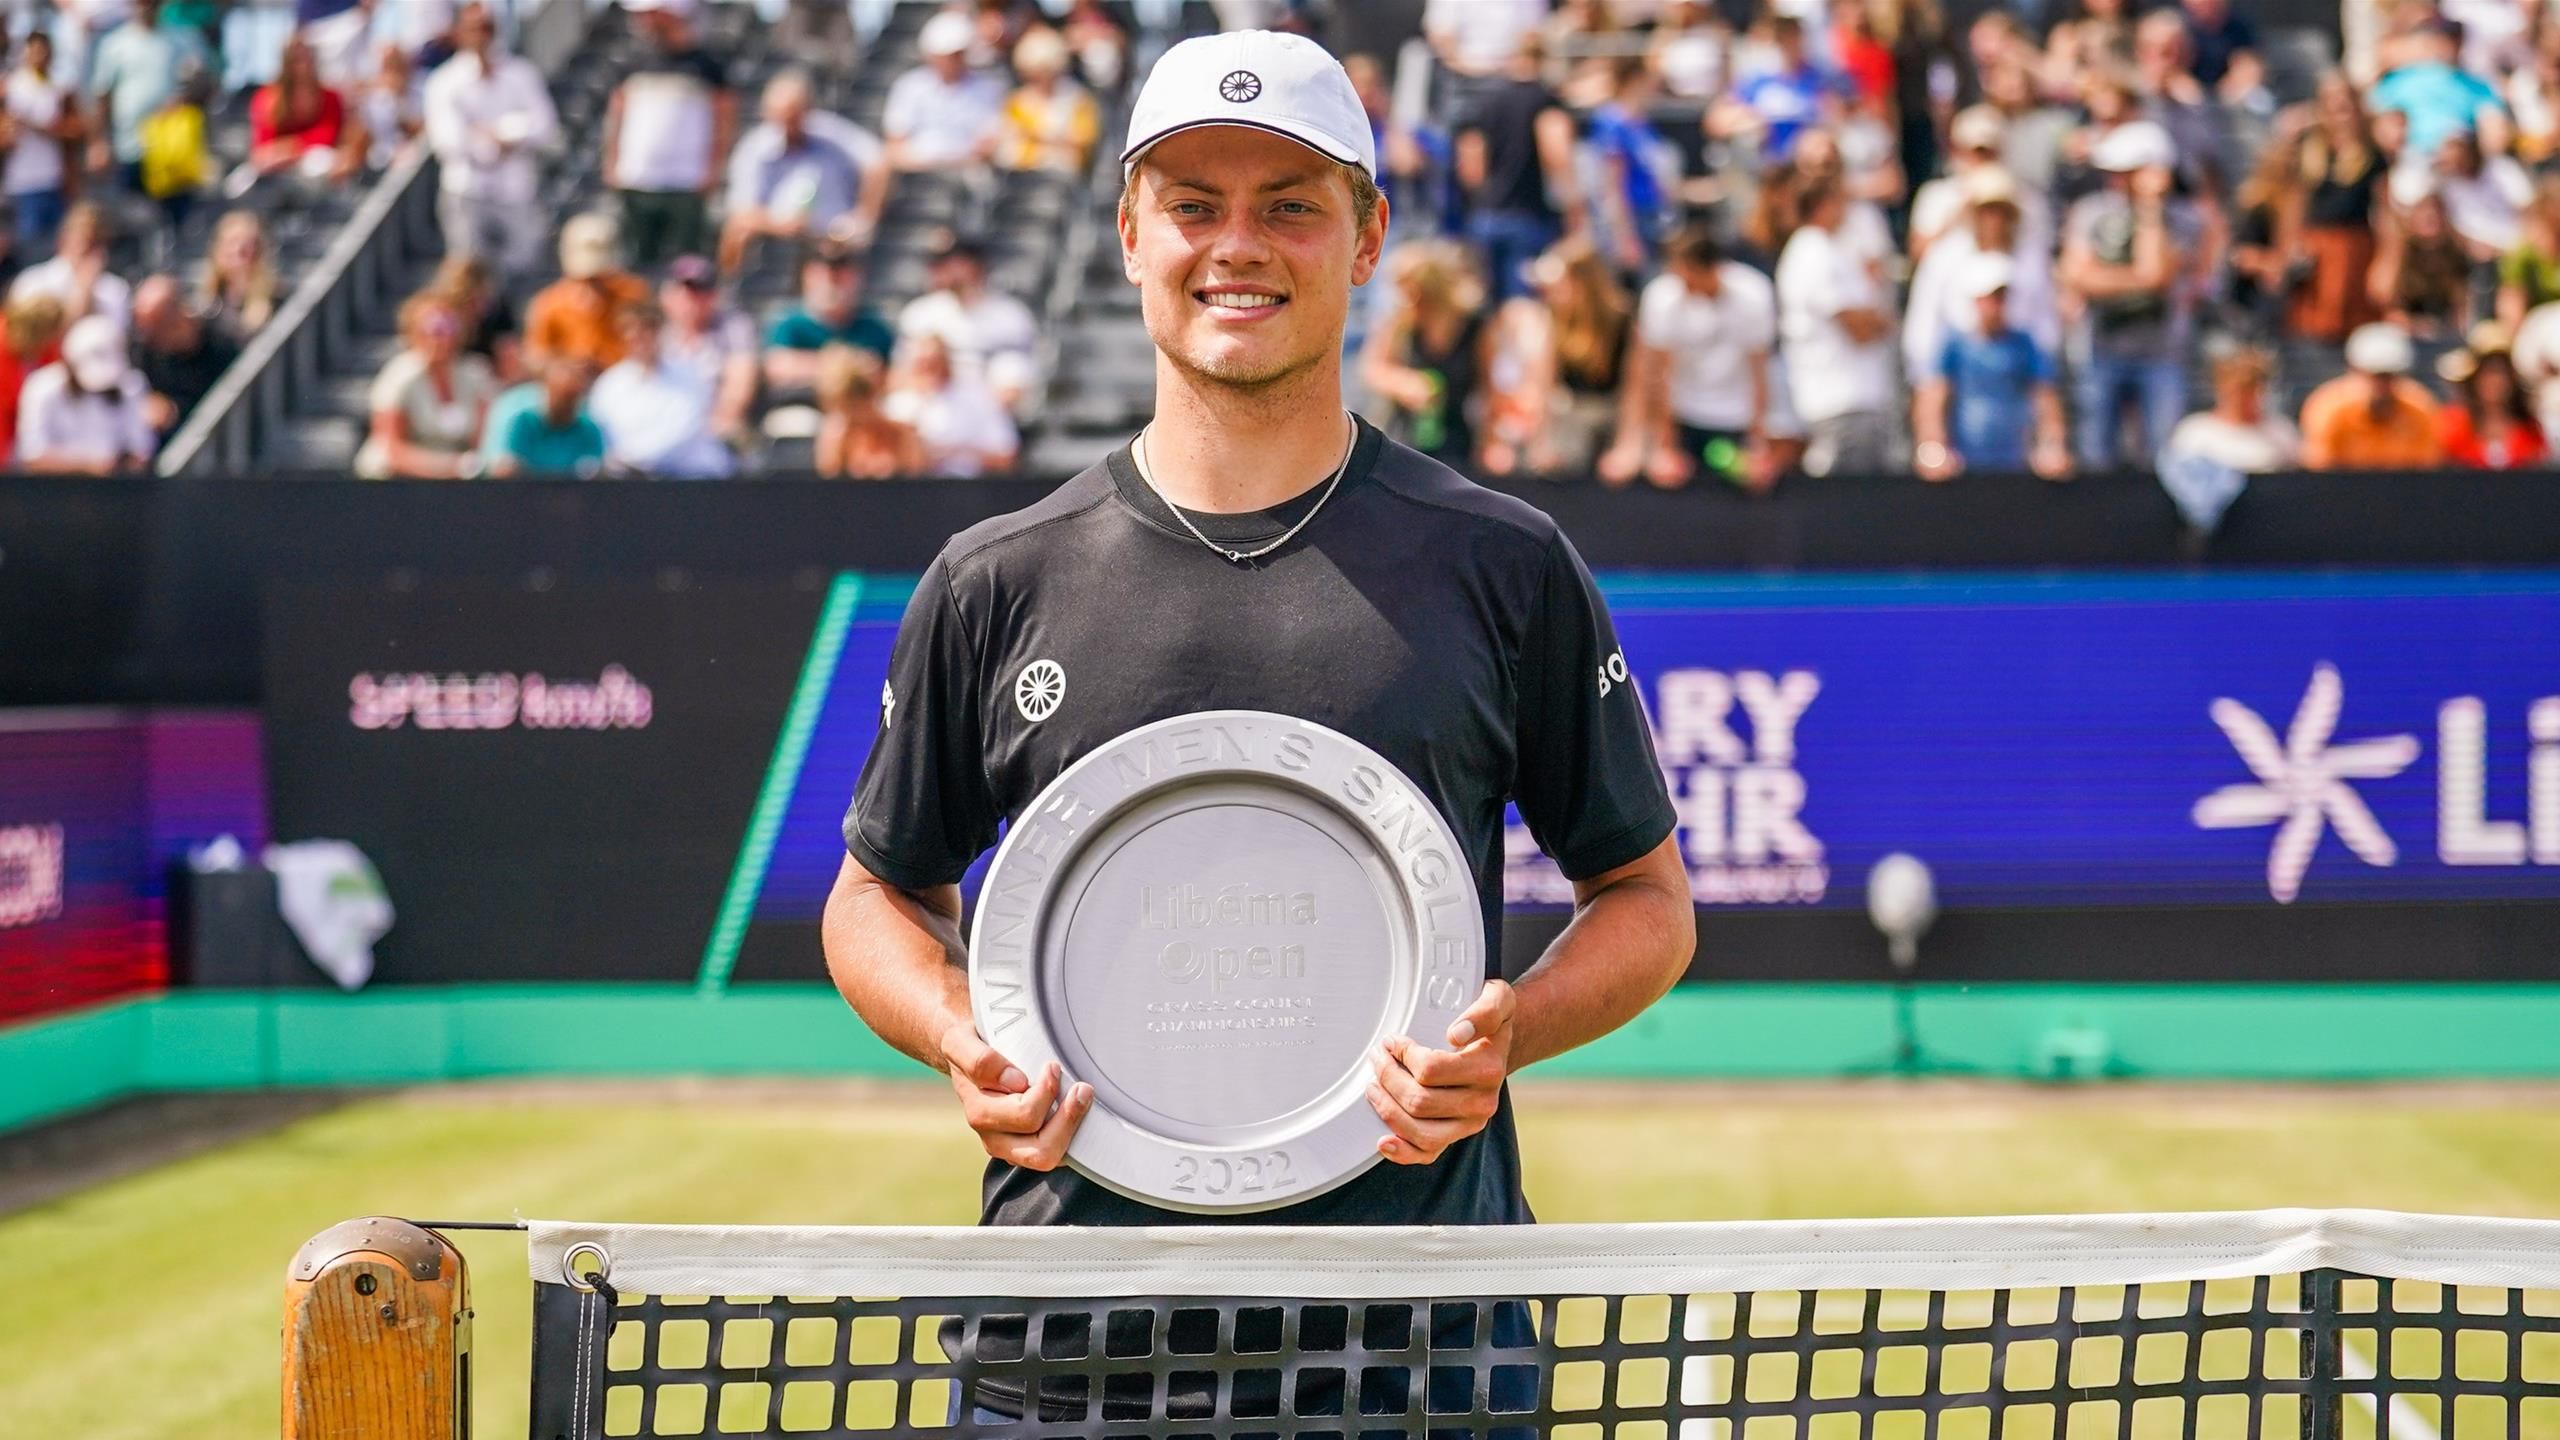 Kansen Deuk deze Biggest ATP Tour upset since? Tim van Rijthoven stuns world No. 2 Daniil  Medvedev to win Libema Open in 's-Hertogenbosch - Eurosport